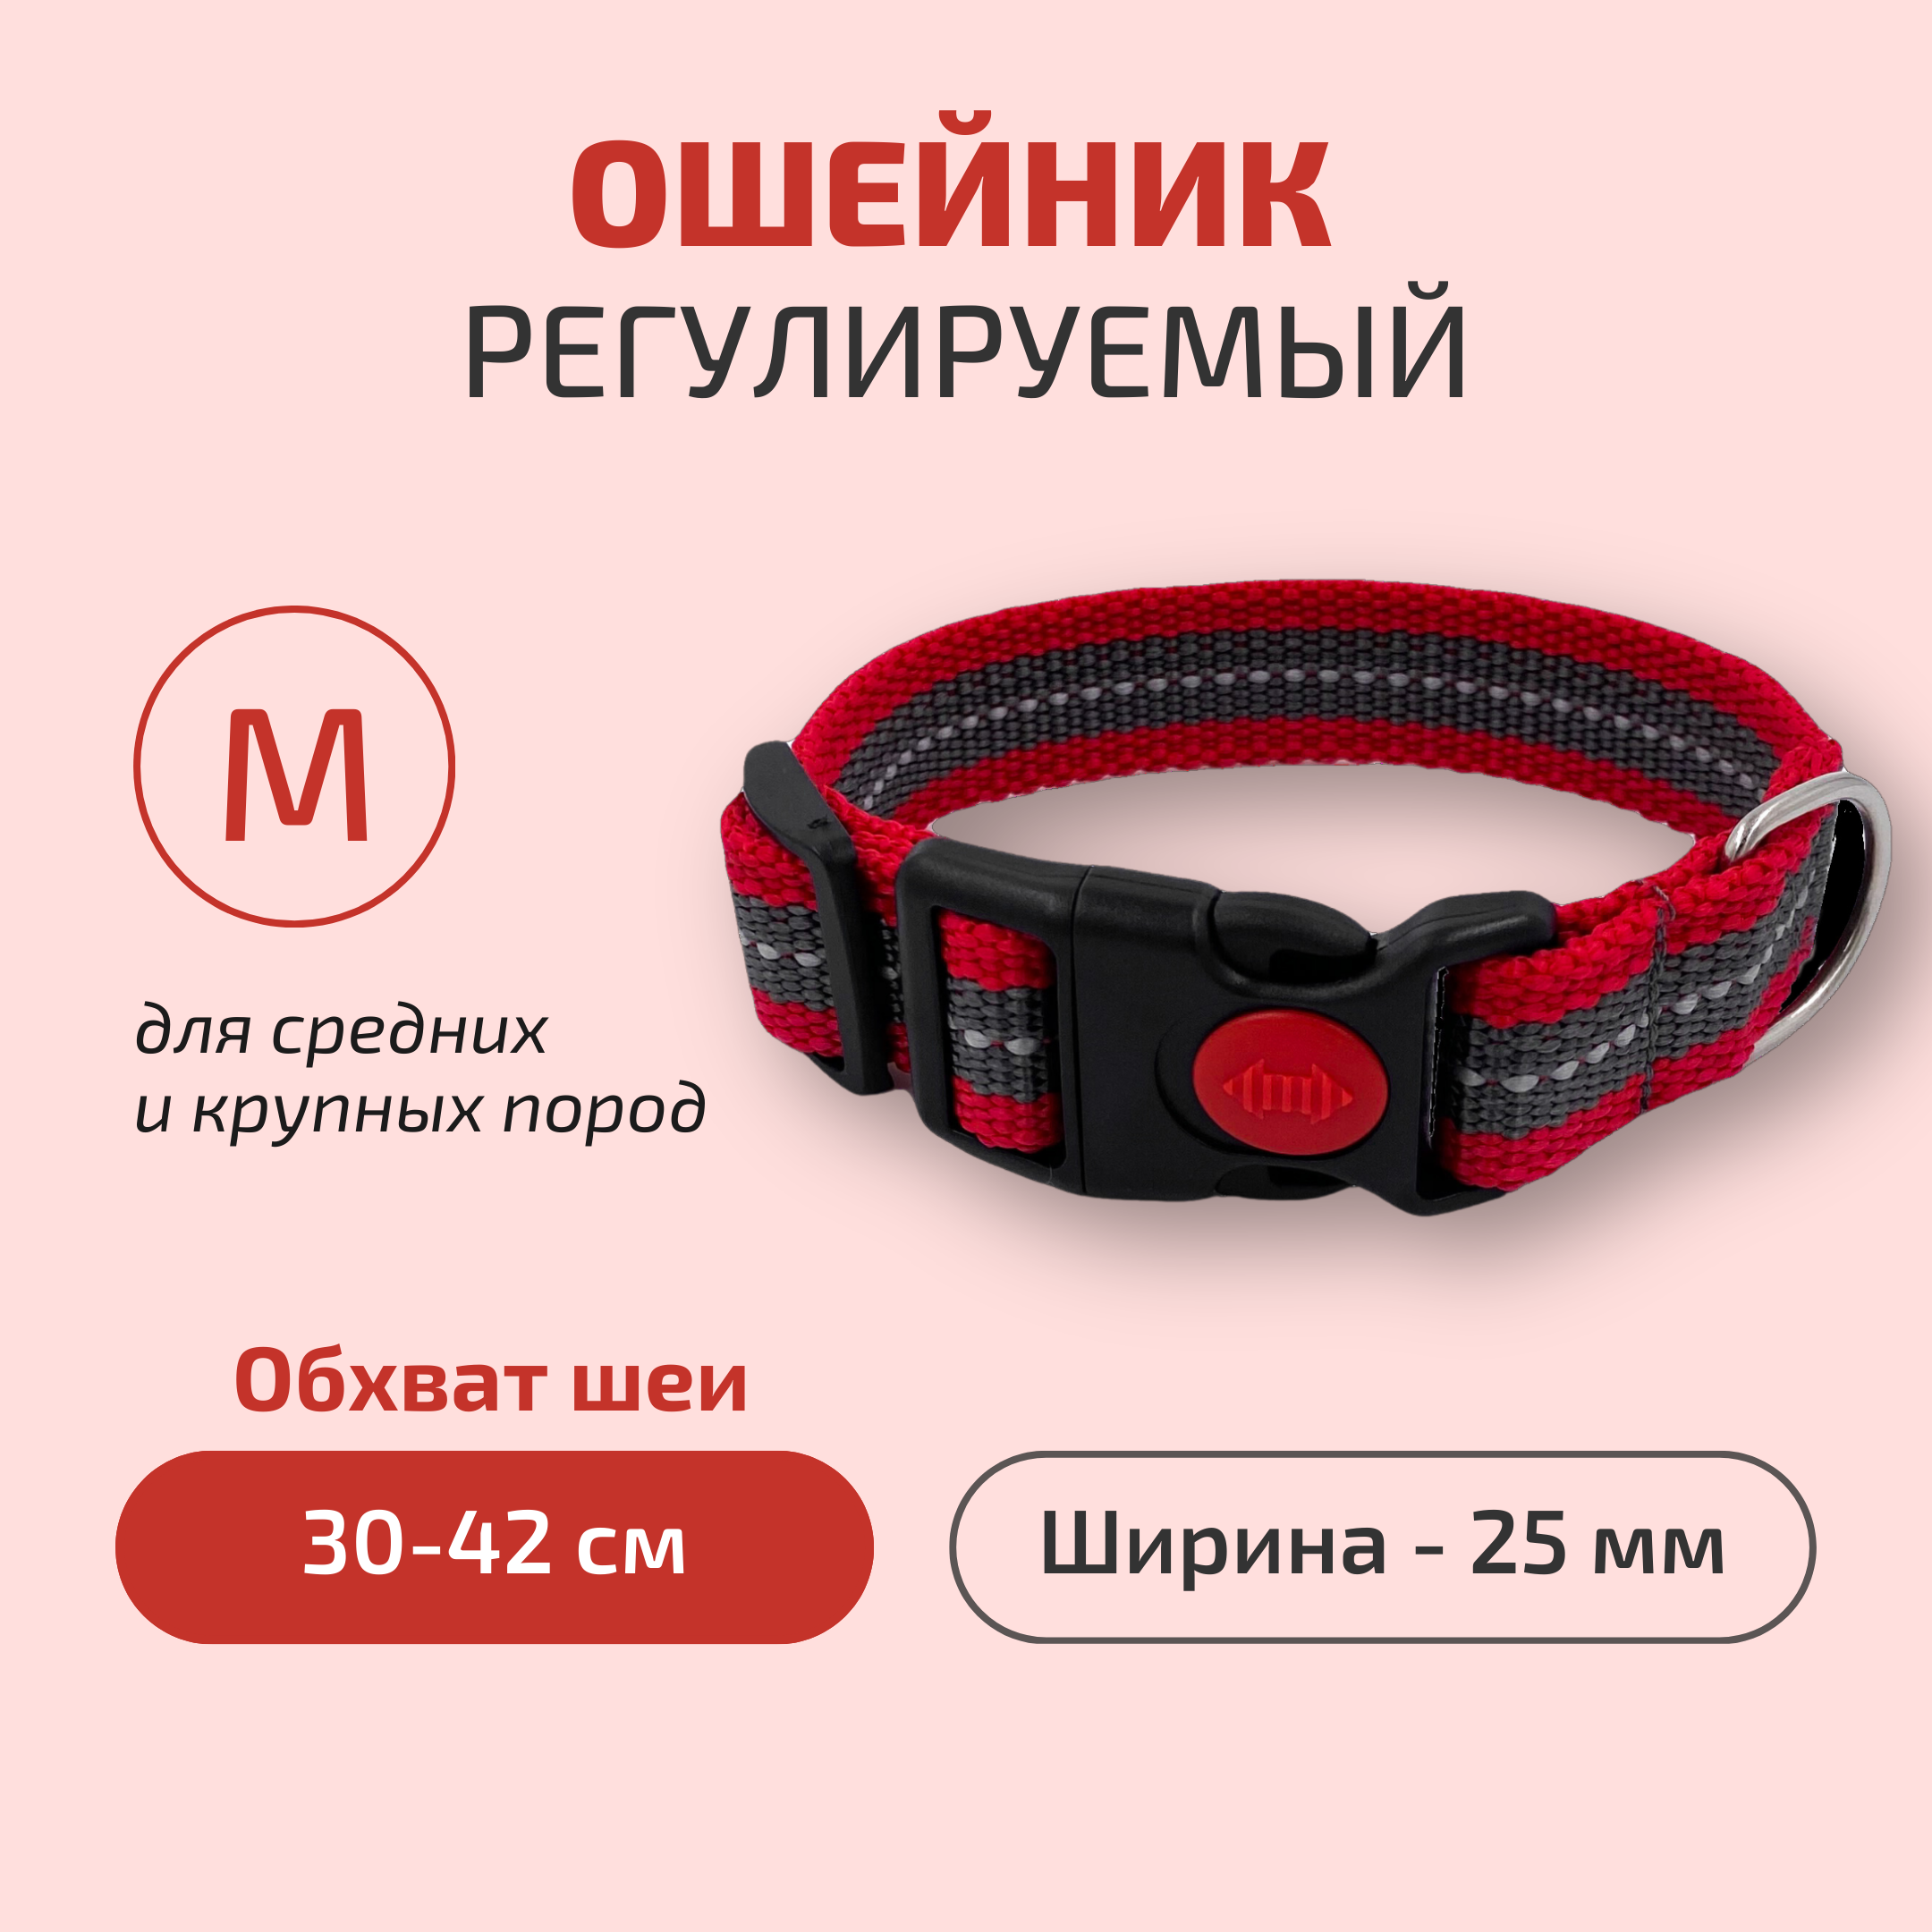 Ошейник для собак Povodki Shop красно-серый, ширина 25 мм, обхват шеи 30-42 см